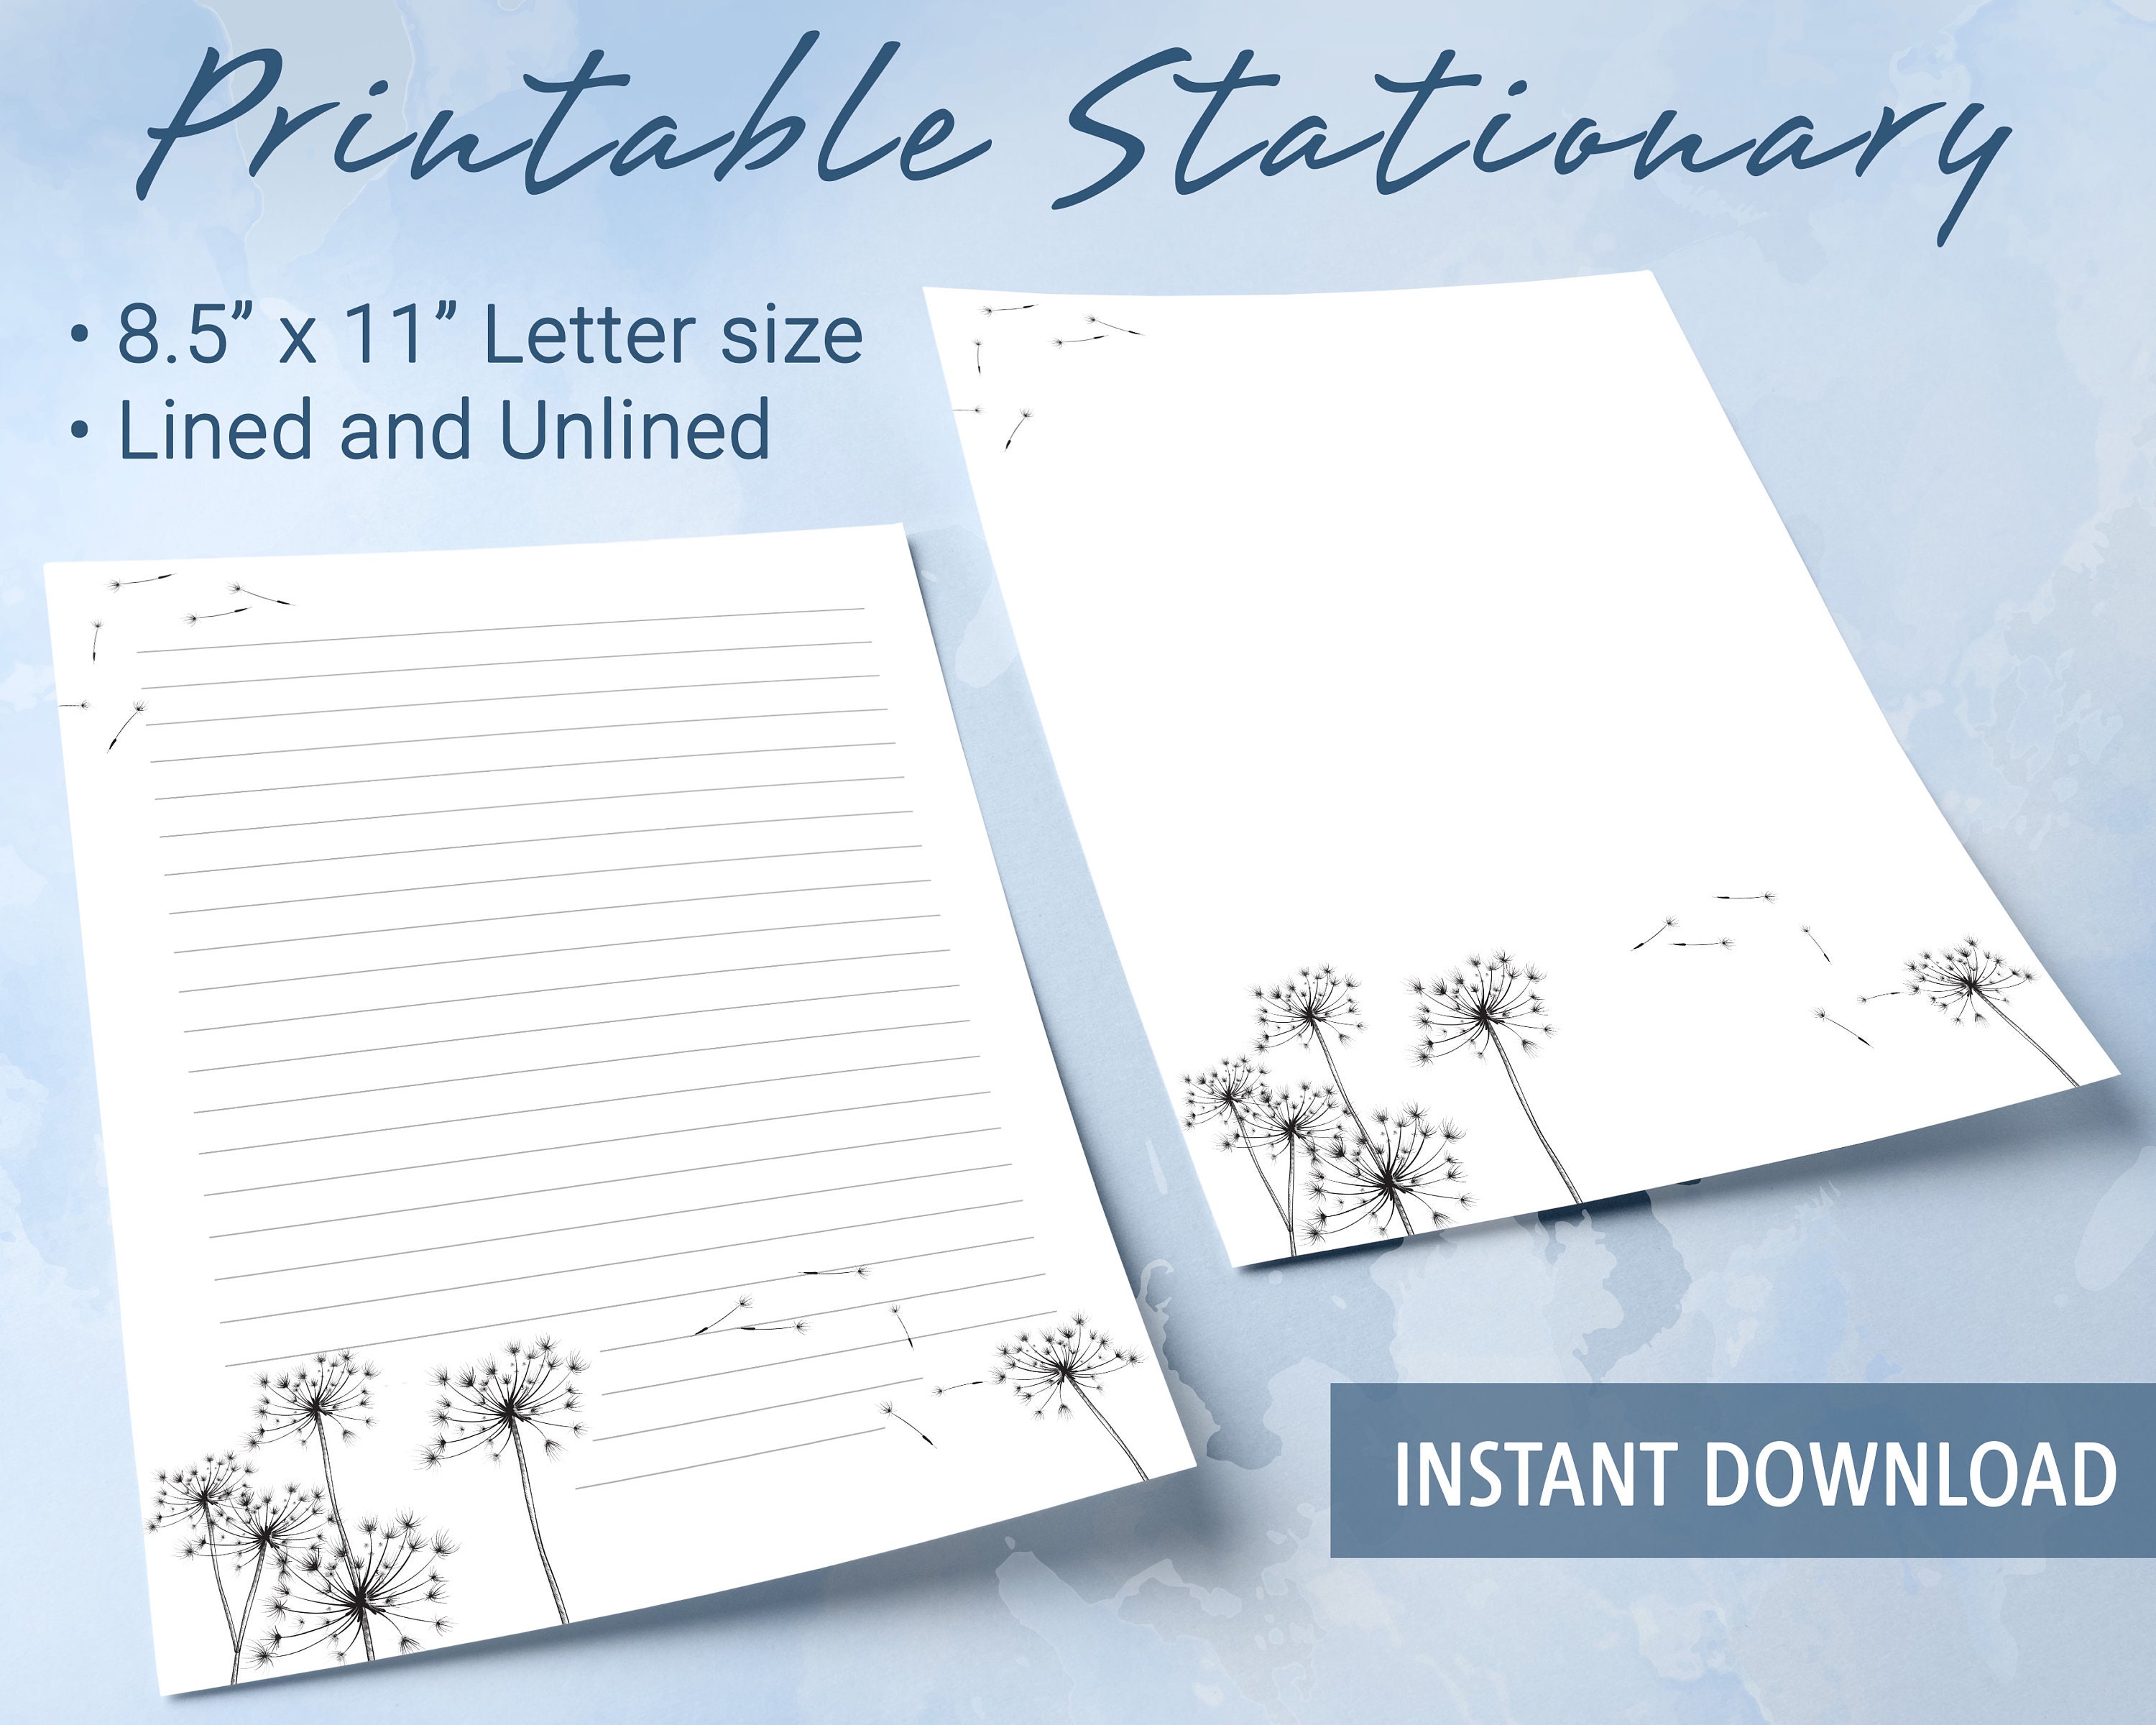 Writing Paper for Kindergarten Instant Download Printable Penmanship Handwriting  Paper in Digital Format for Kids Preschool Print at Home 